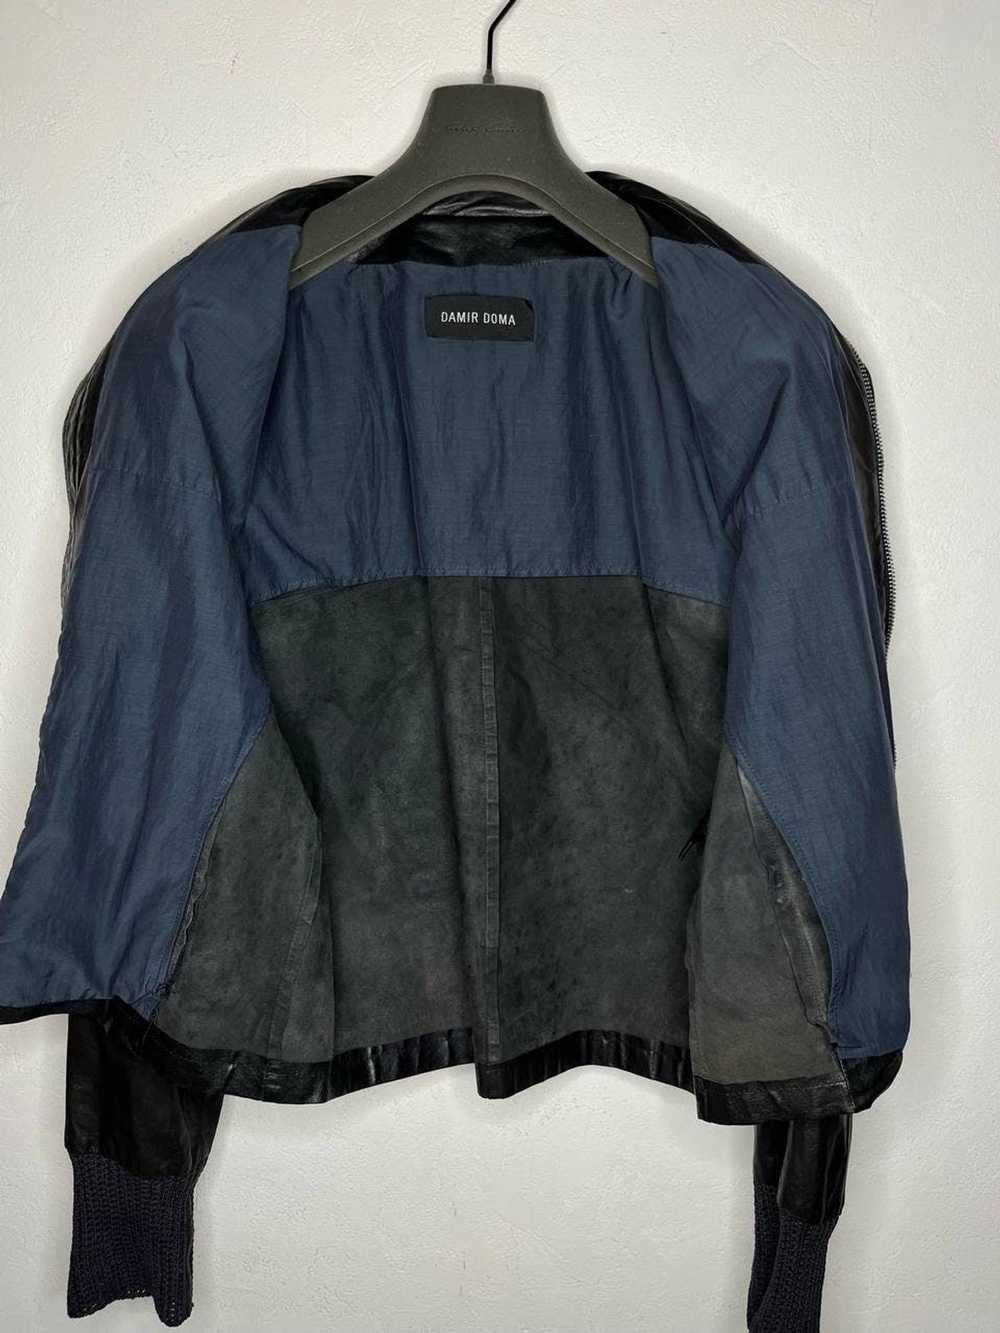 Damir Doma Damir Doma Leather Jacket - image 4